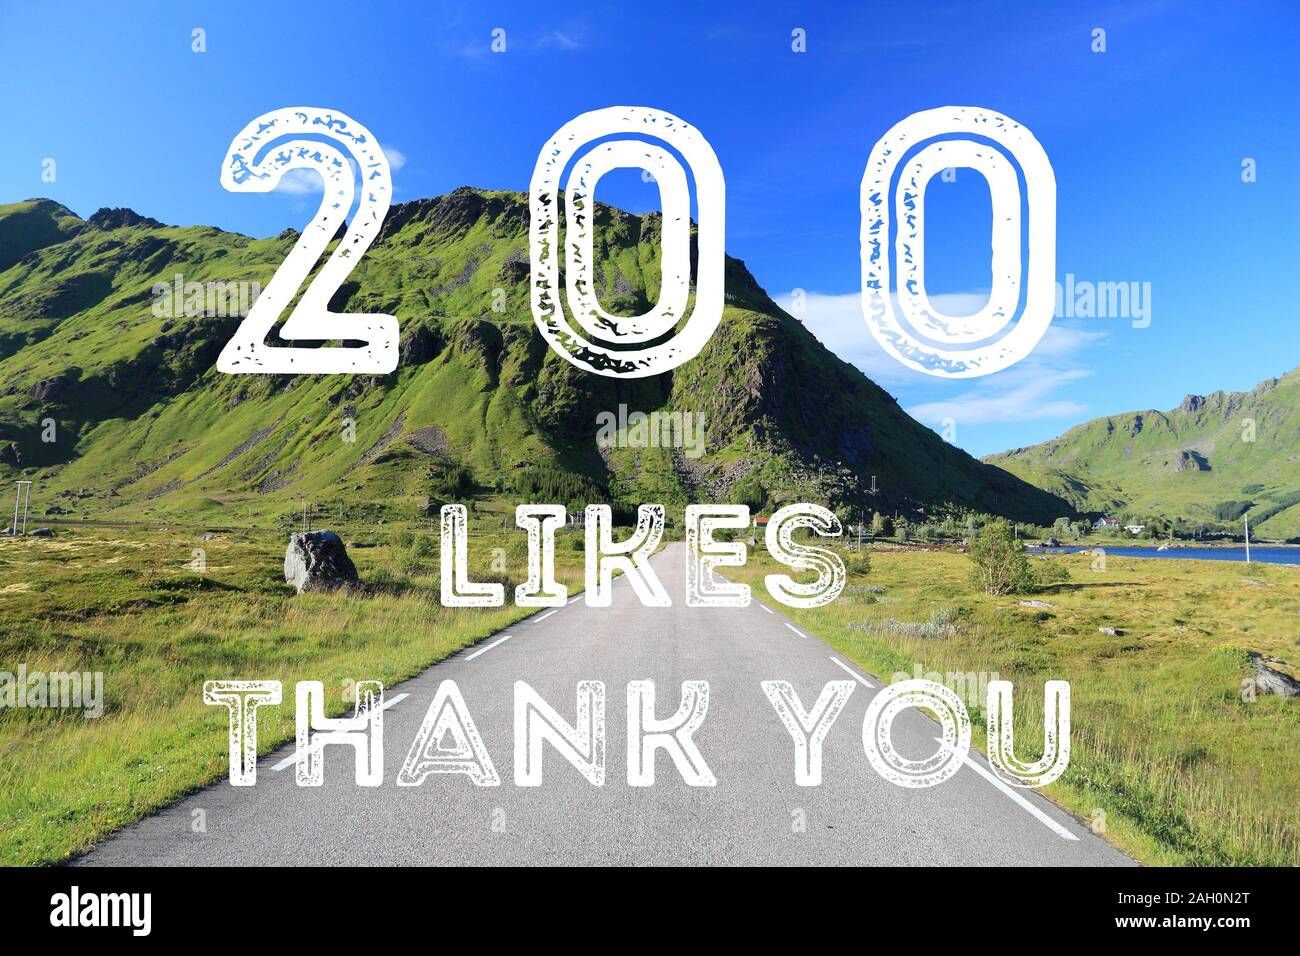 200 likes - social media milestone achievement. Online community thank you note. 200 follows. Stock Photo